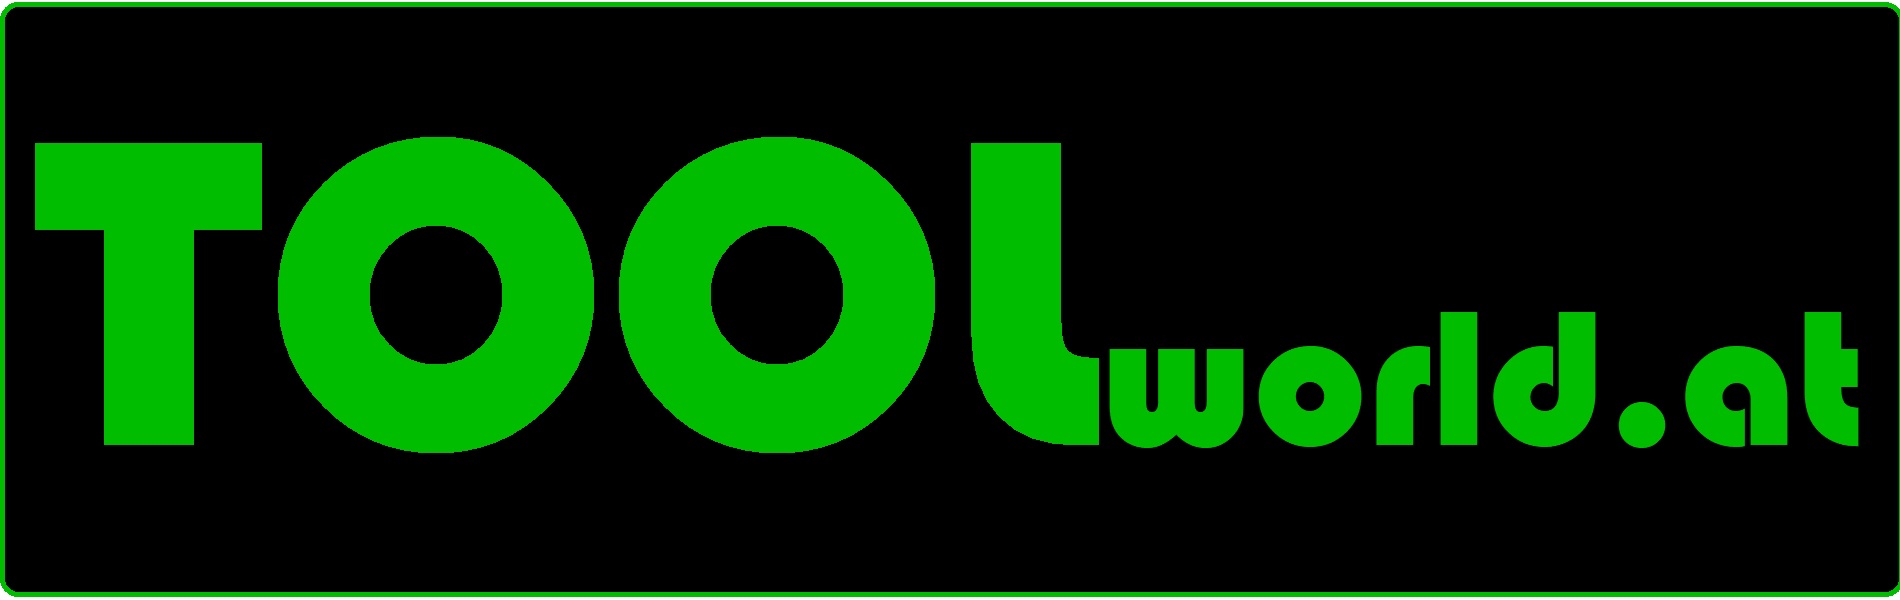 Toolworld.at-Logo